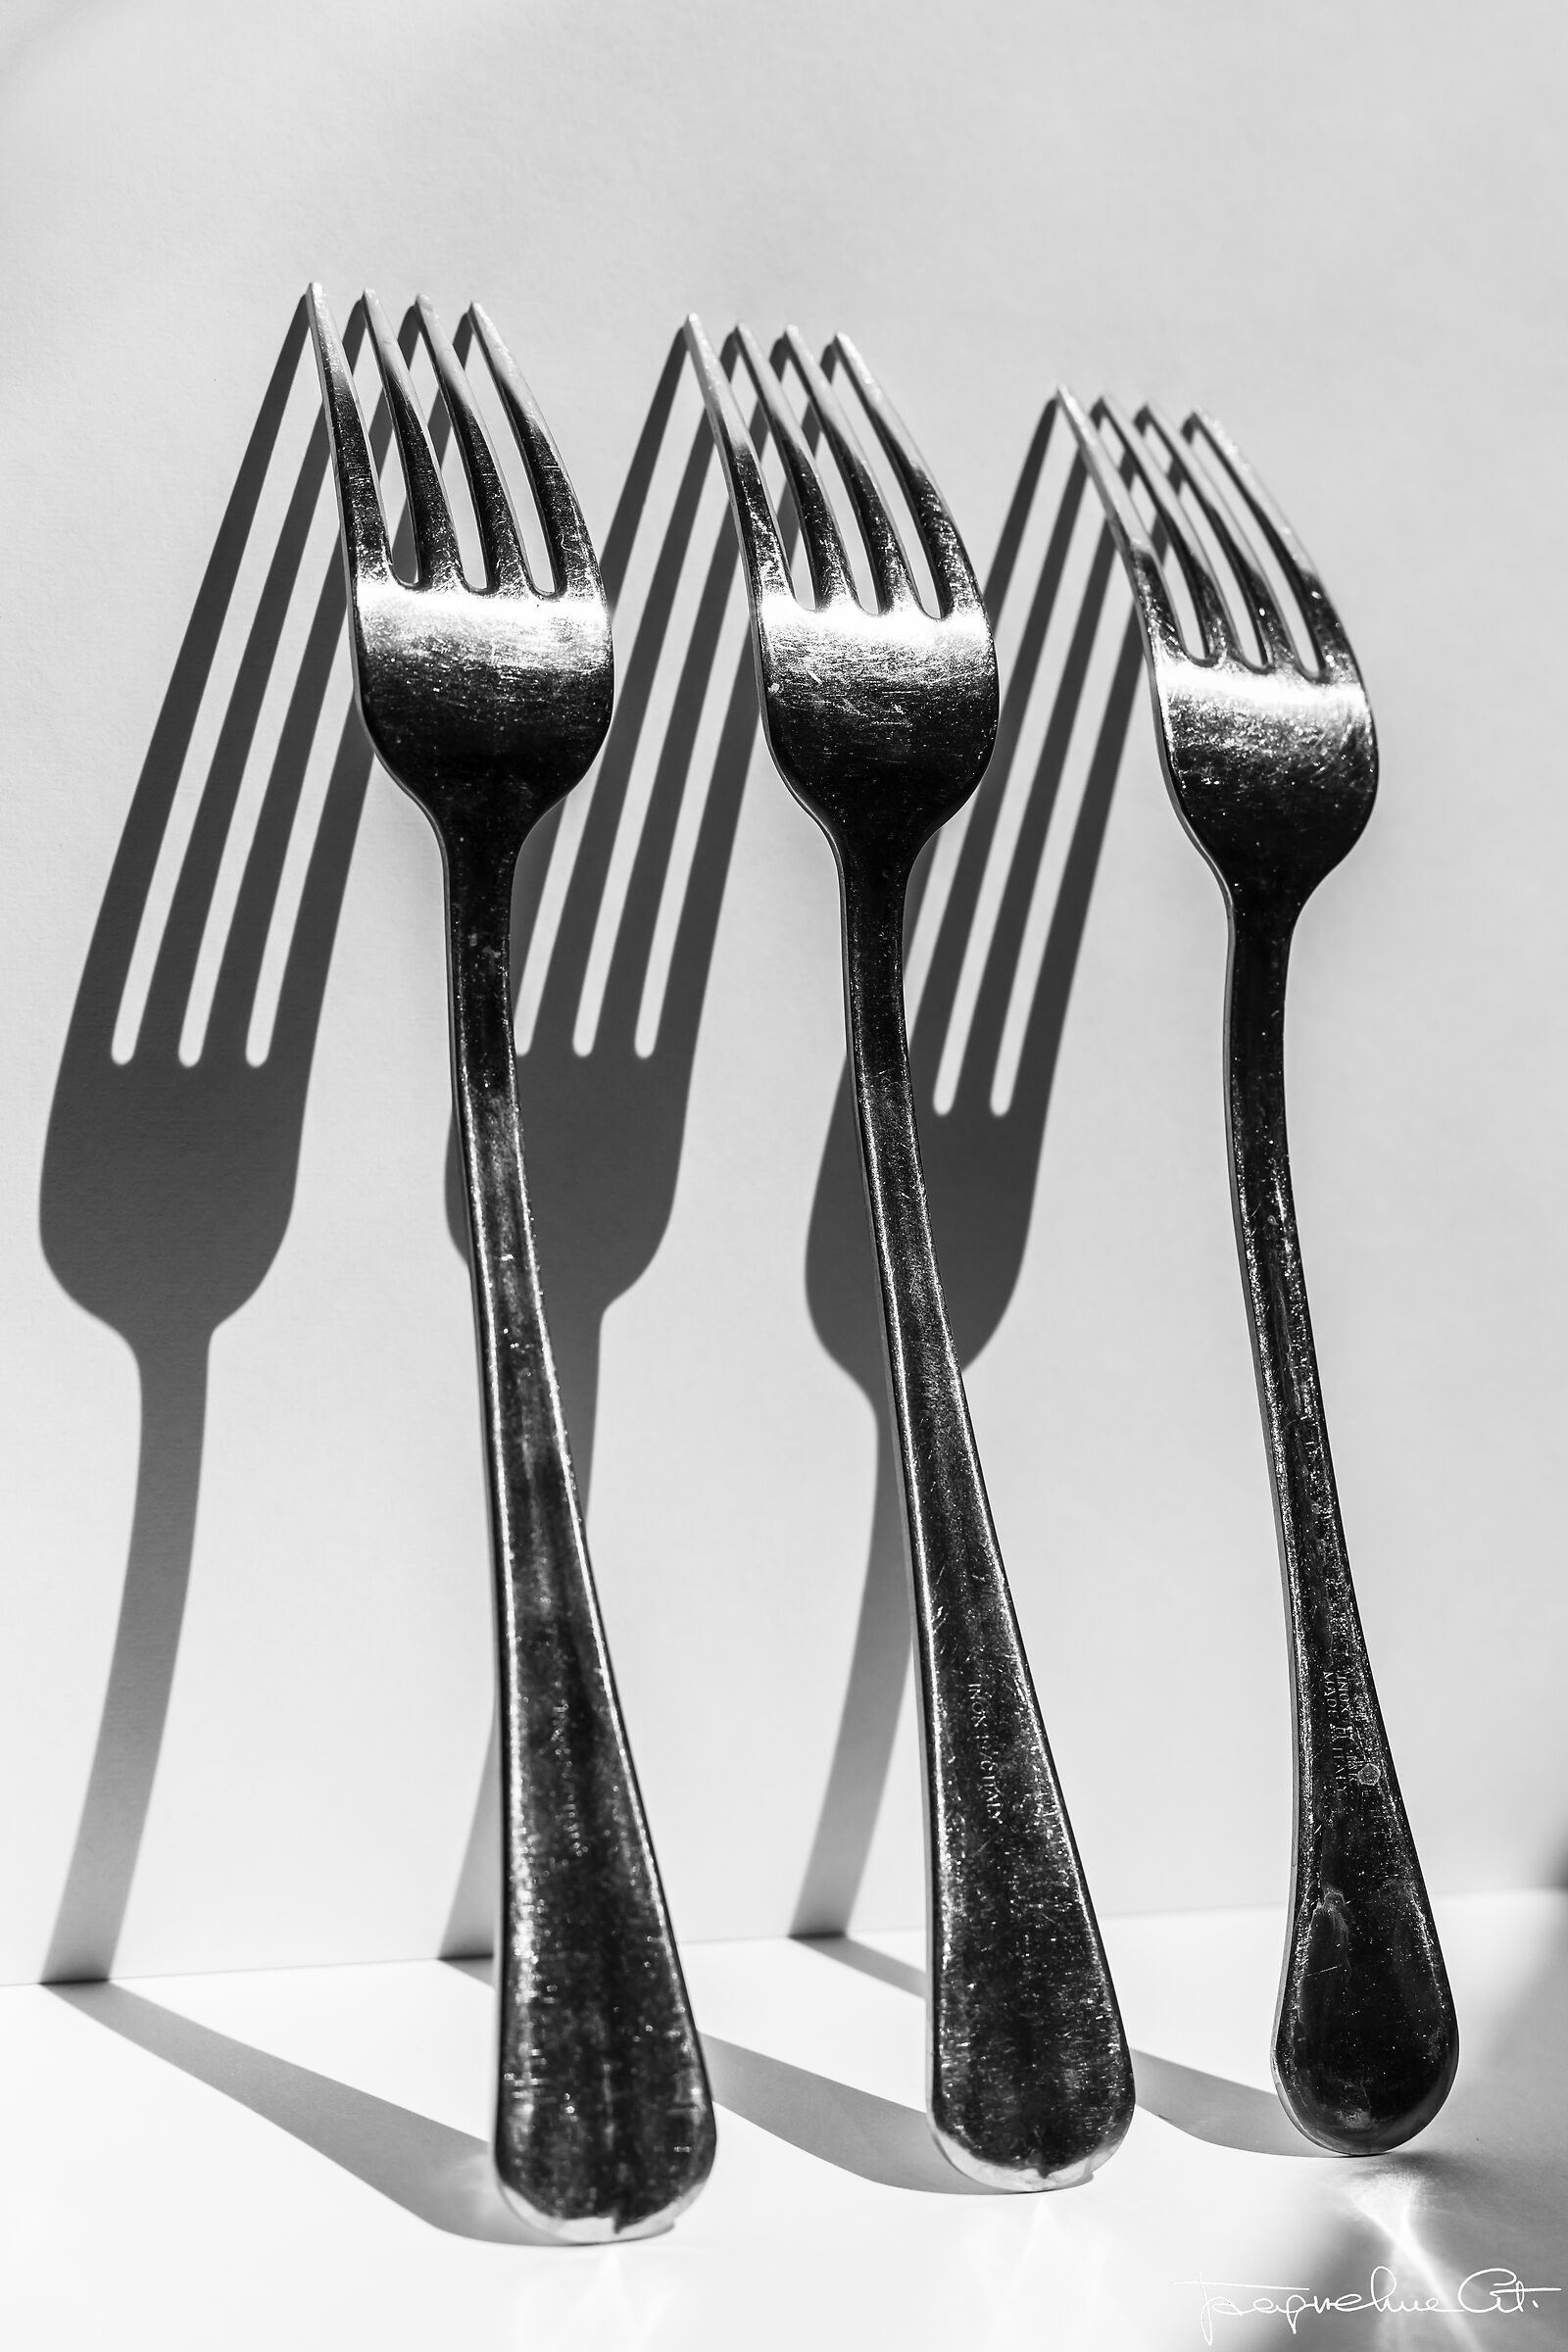 the forks...